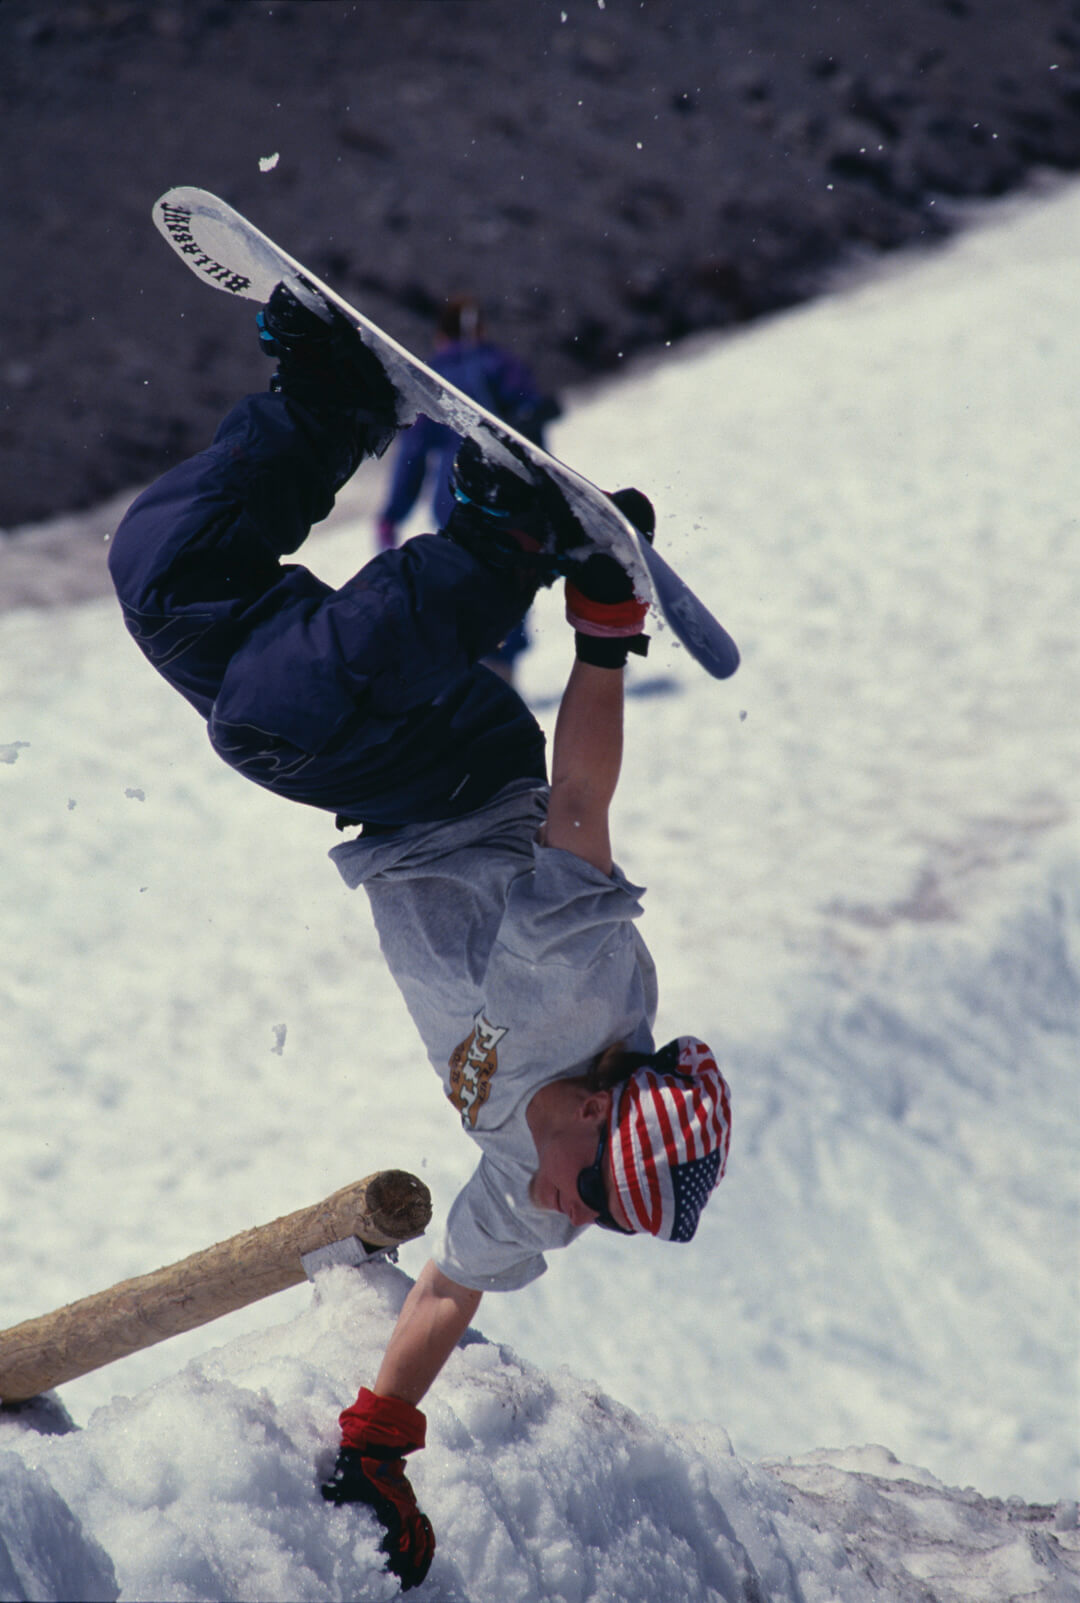 Noah Salasnek snowboarding trevor graves photography